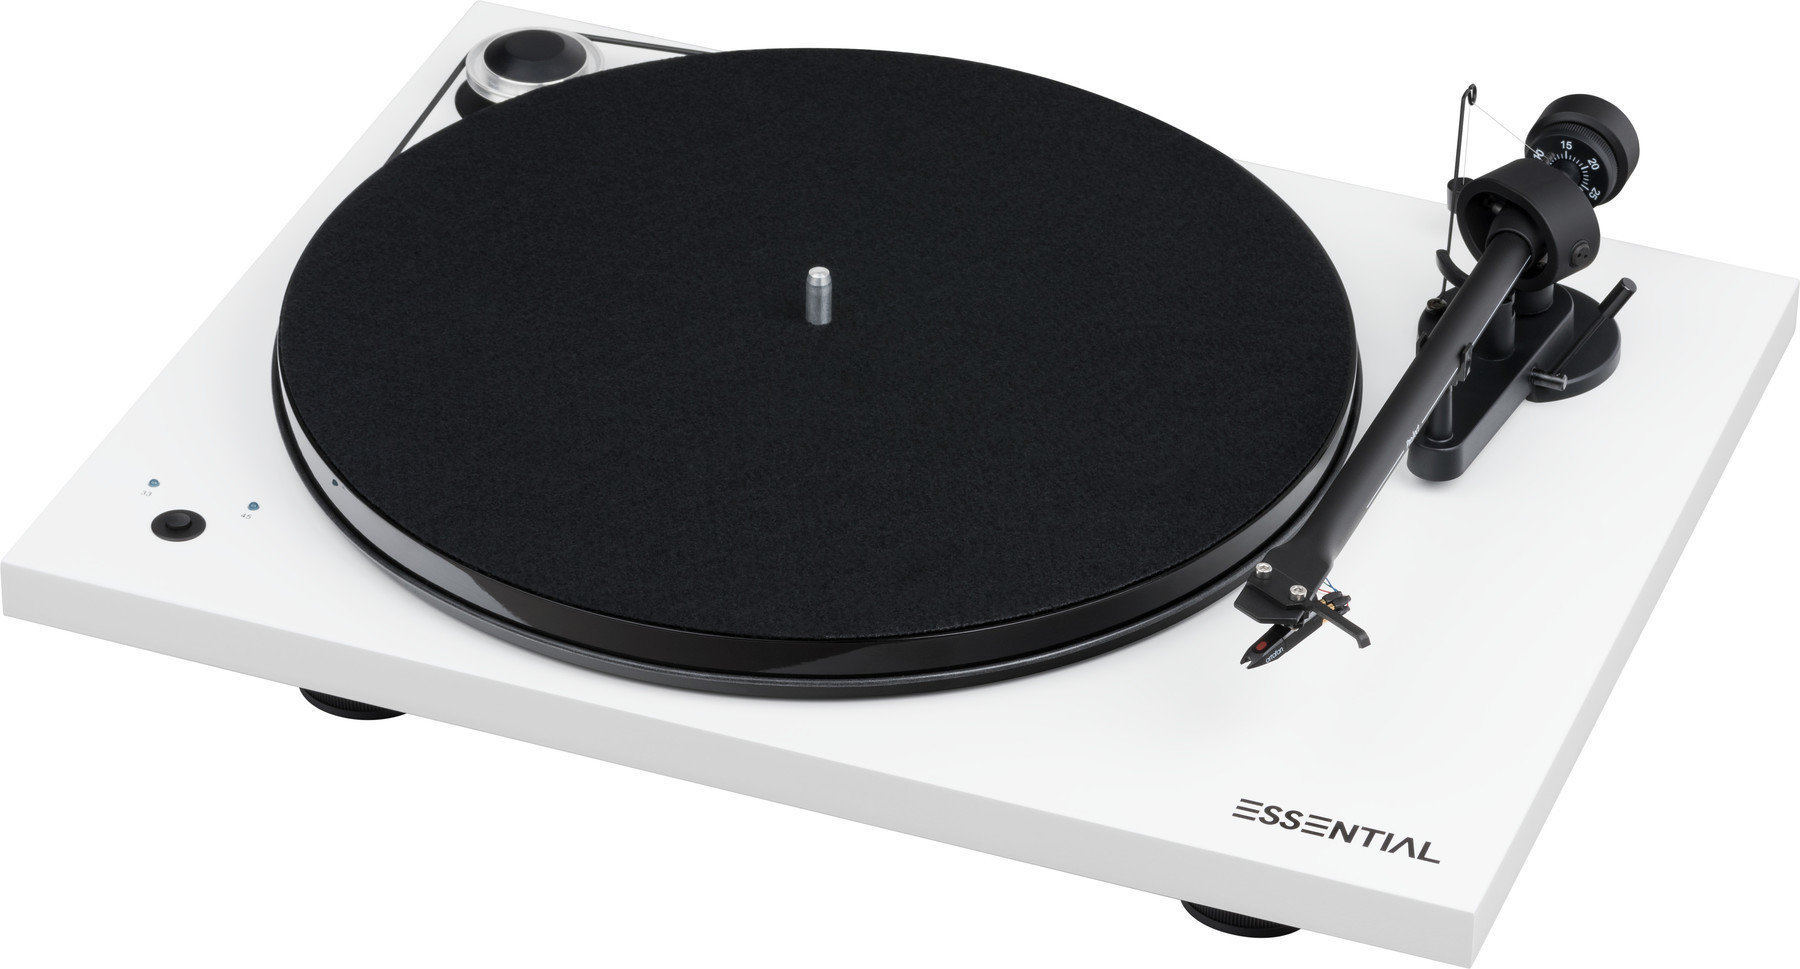 Predvajalnik Pro-Ject Essential III RecordMaster + OM 10 High Gloss White